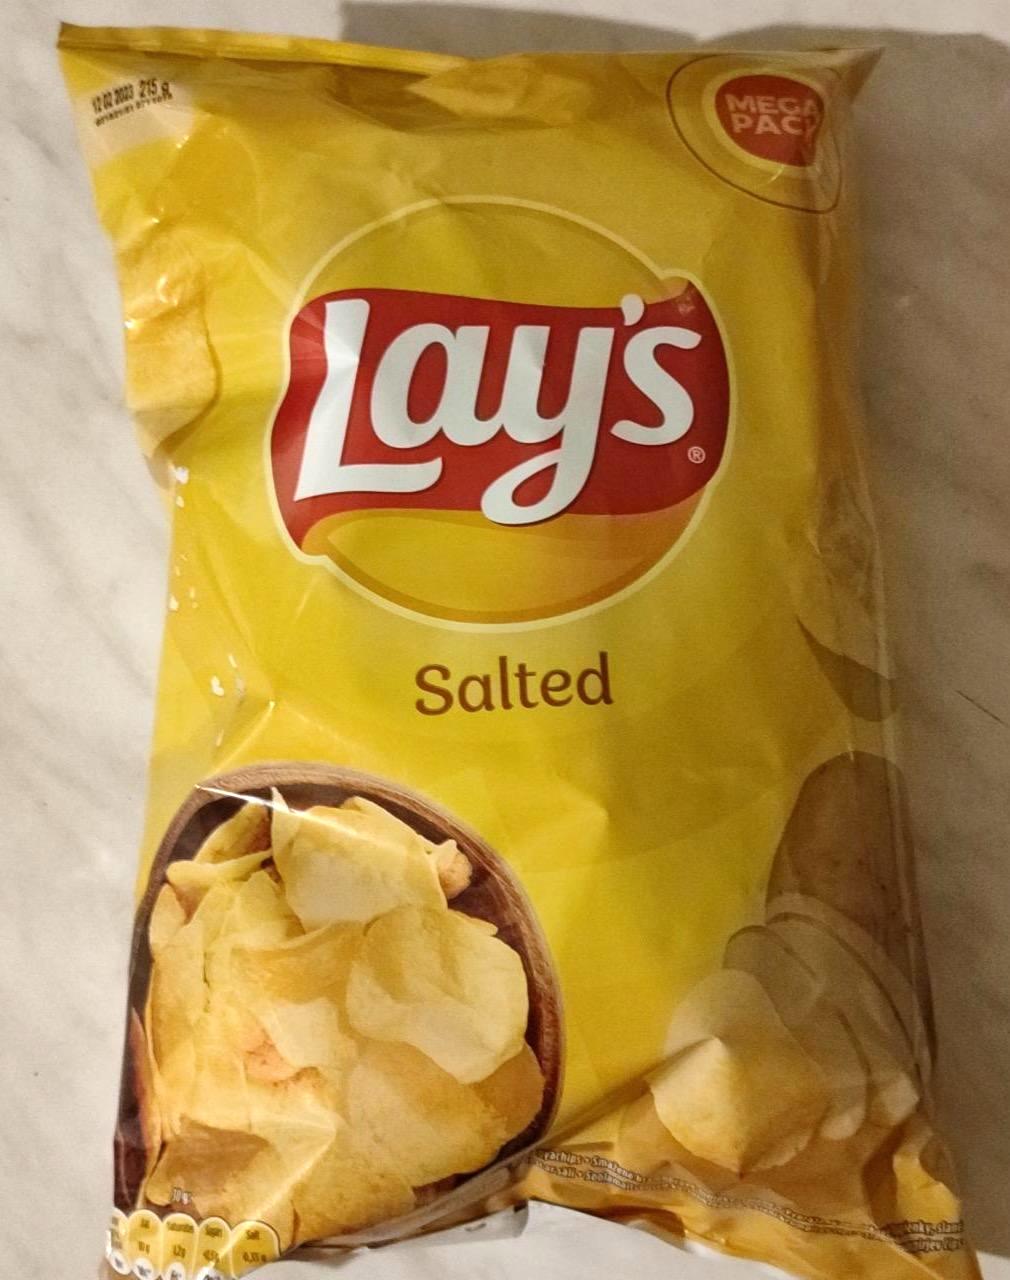 Képek - Sózott burgonya chips Mega pack Lays